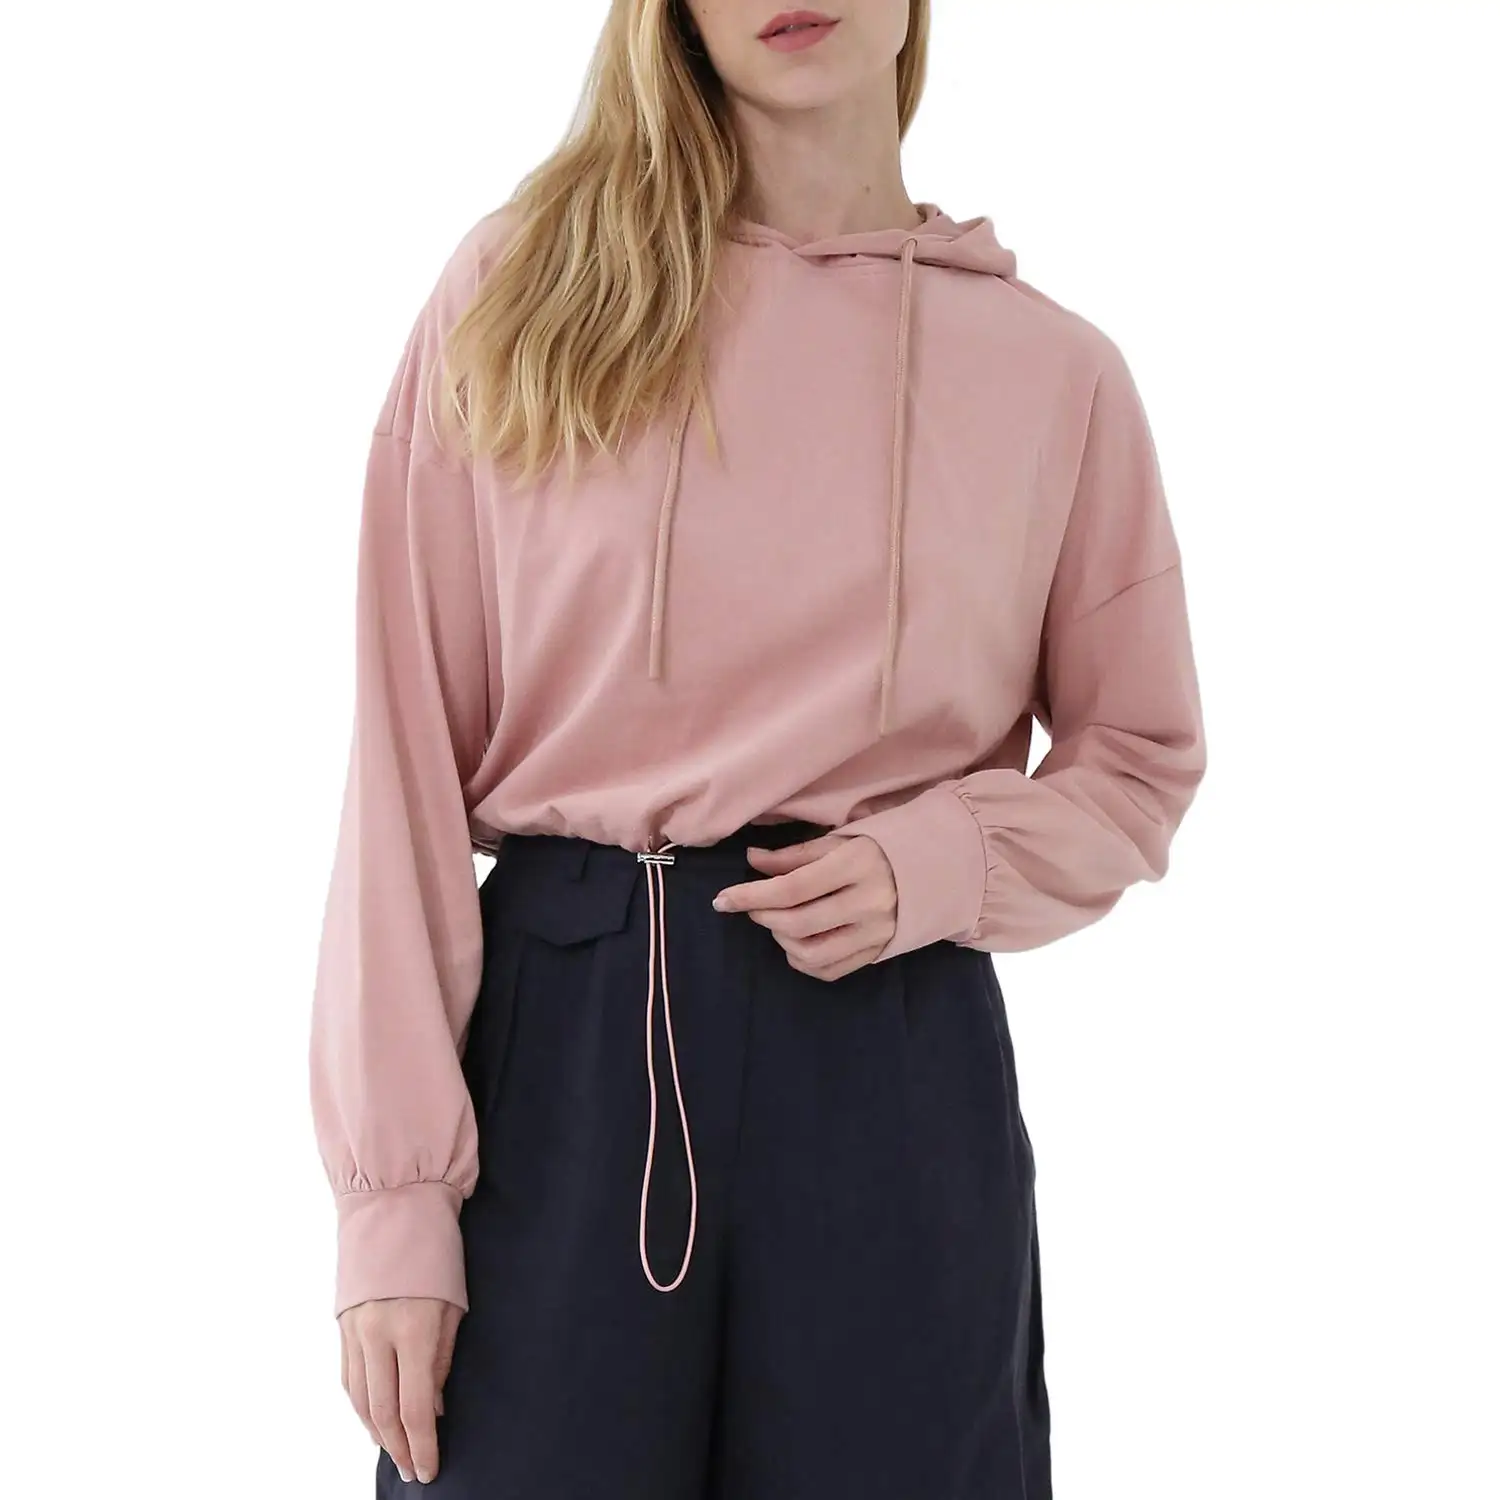 Sweatshirt Women's Crop Top Hoodie Drawstring Pullover Lady's Long Sleeve Loose Cropped Tops with adjustable elastic drawstring